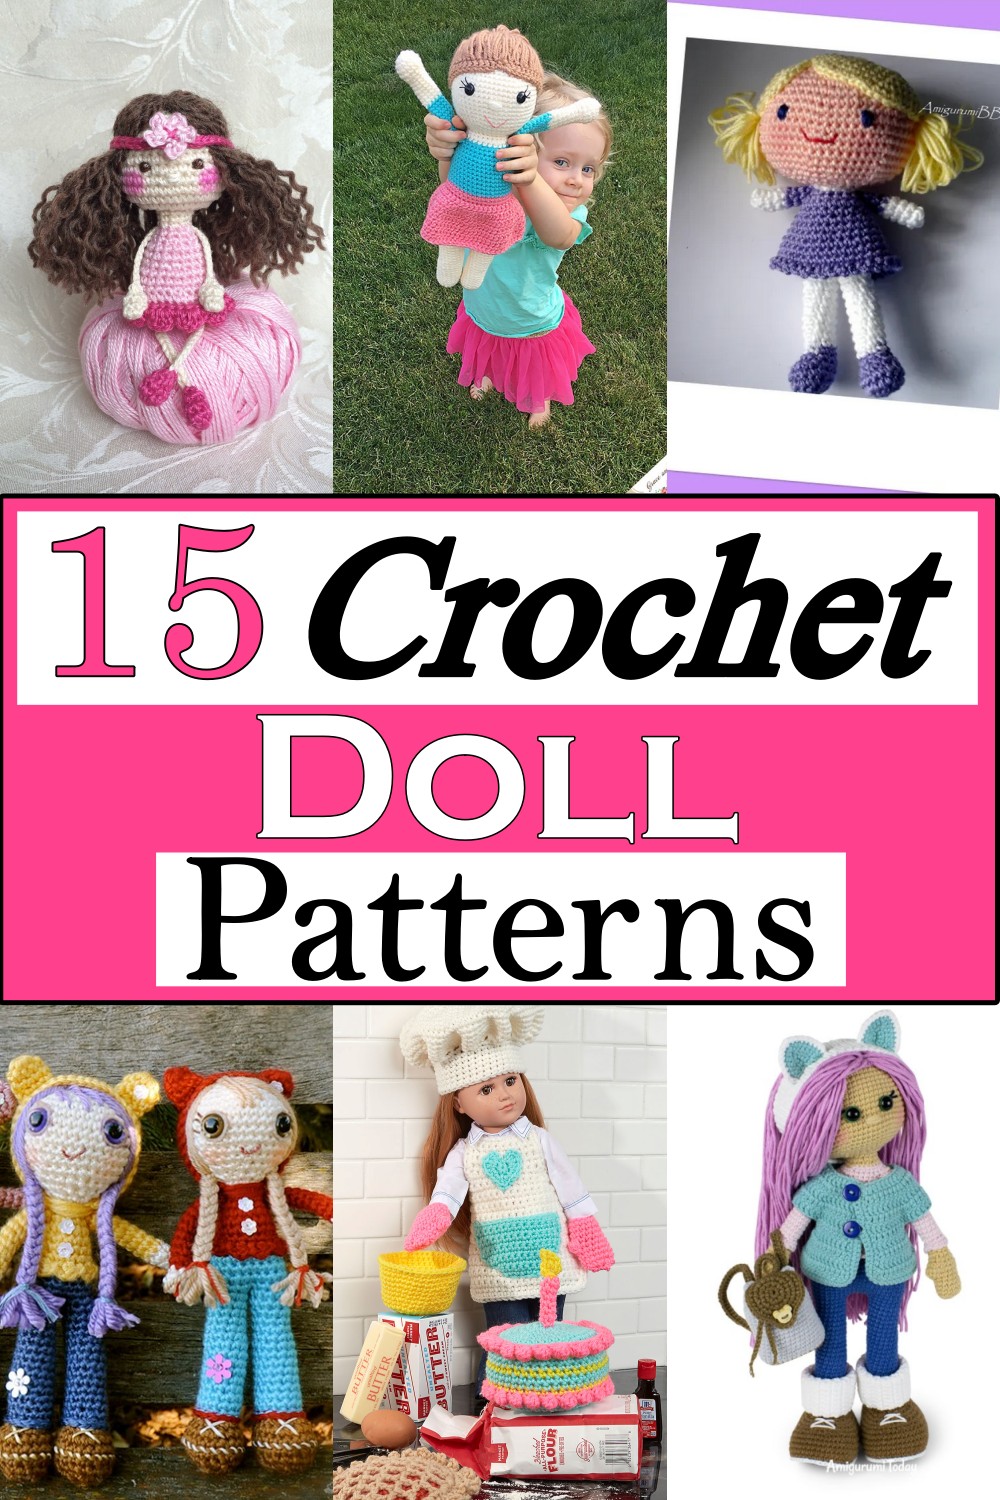 Free Crochet Doll Patterns